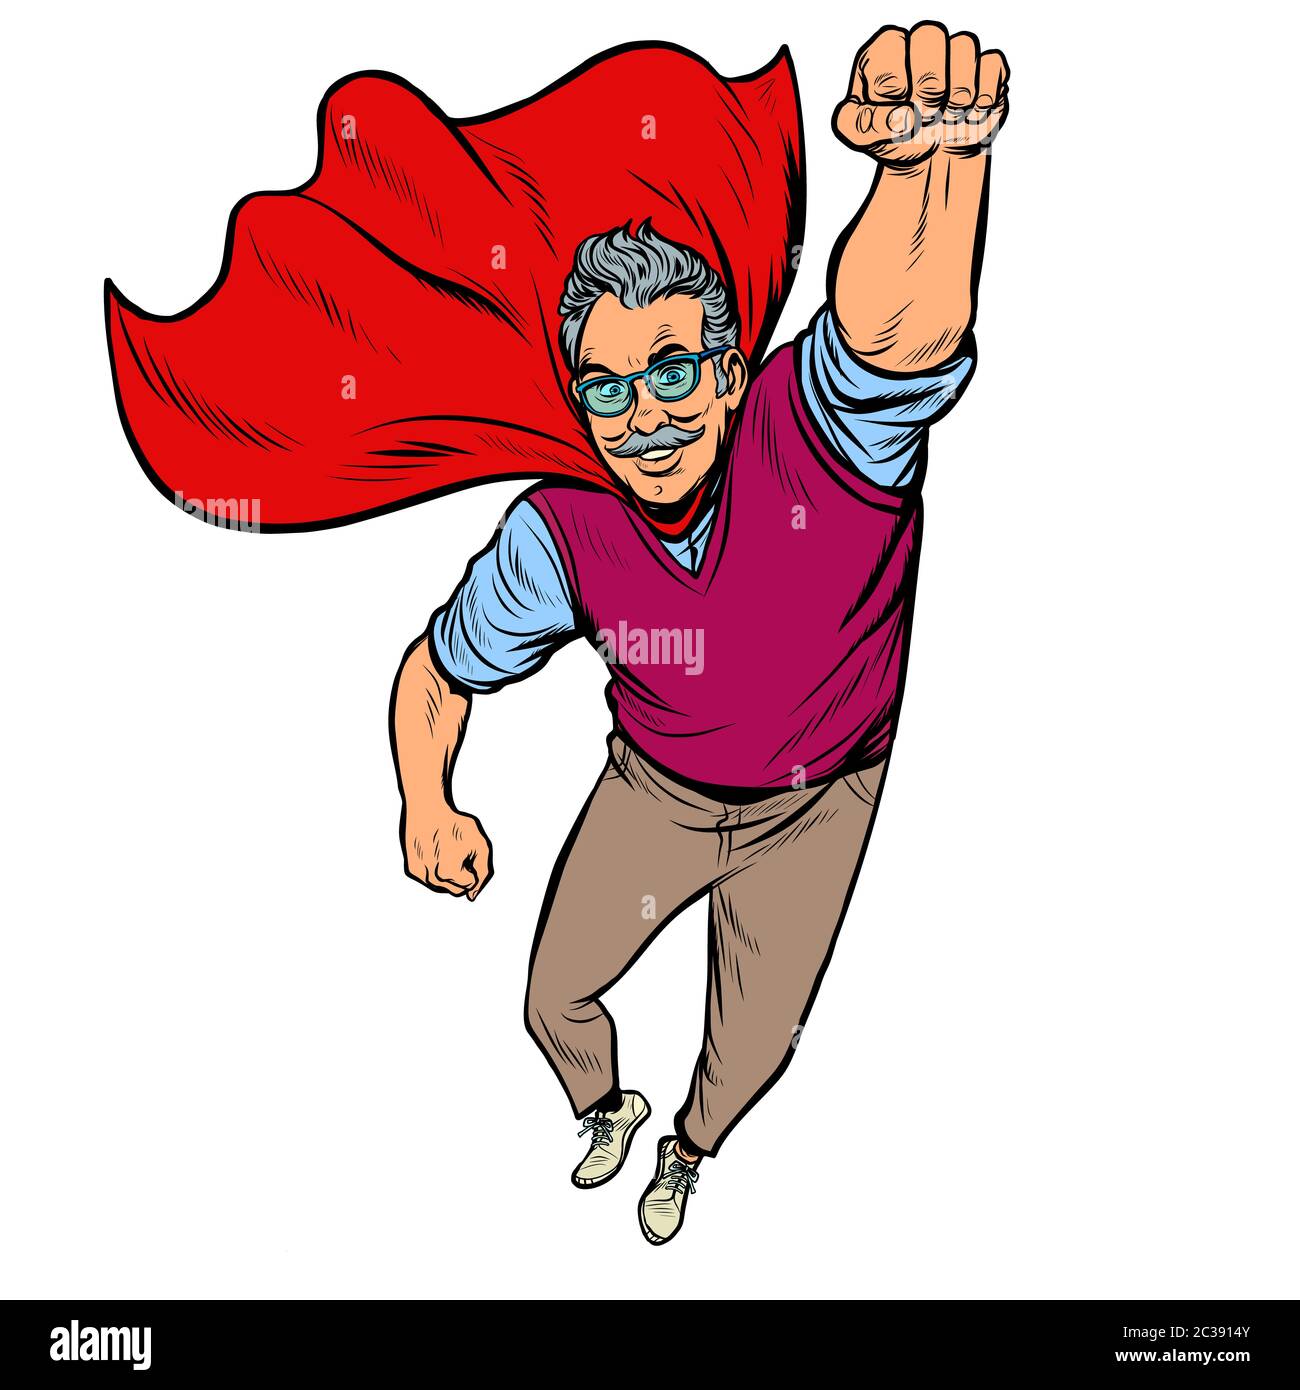 man retired superhero. Health and longevity of older people. Pop art retro vector illustration drawing vintage kitsch Stock Photo